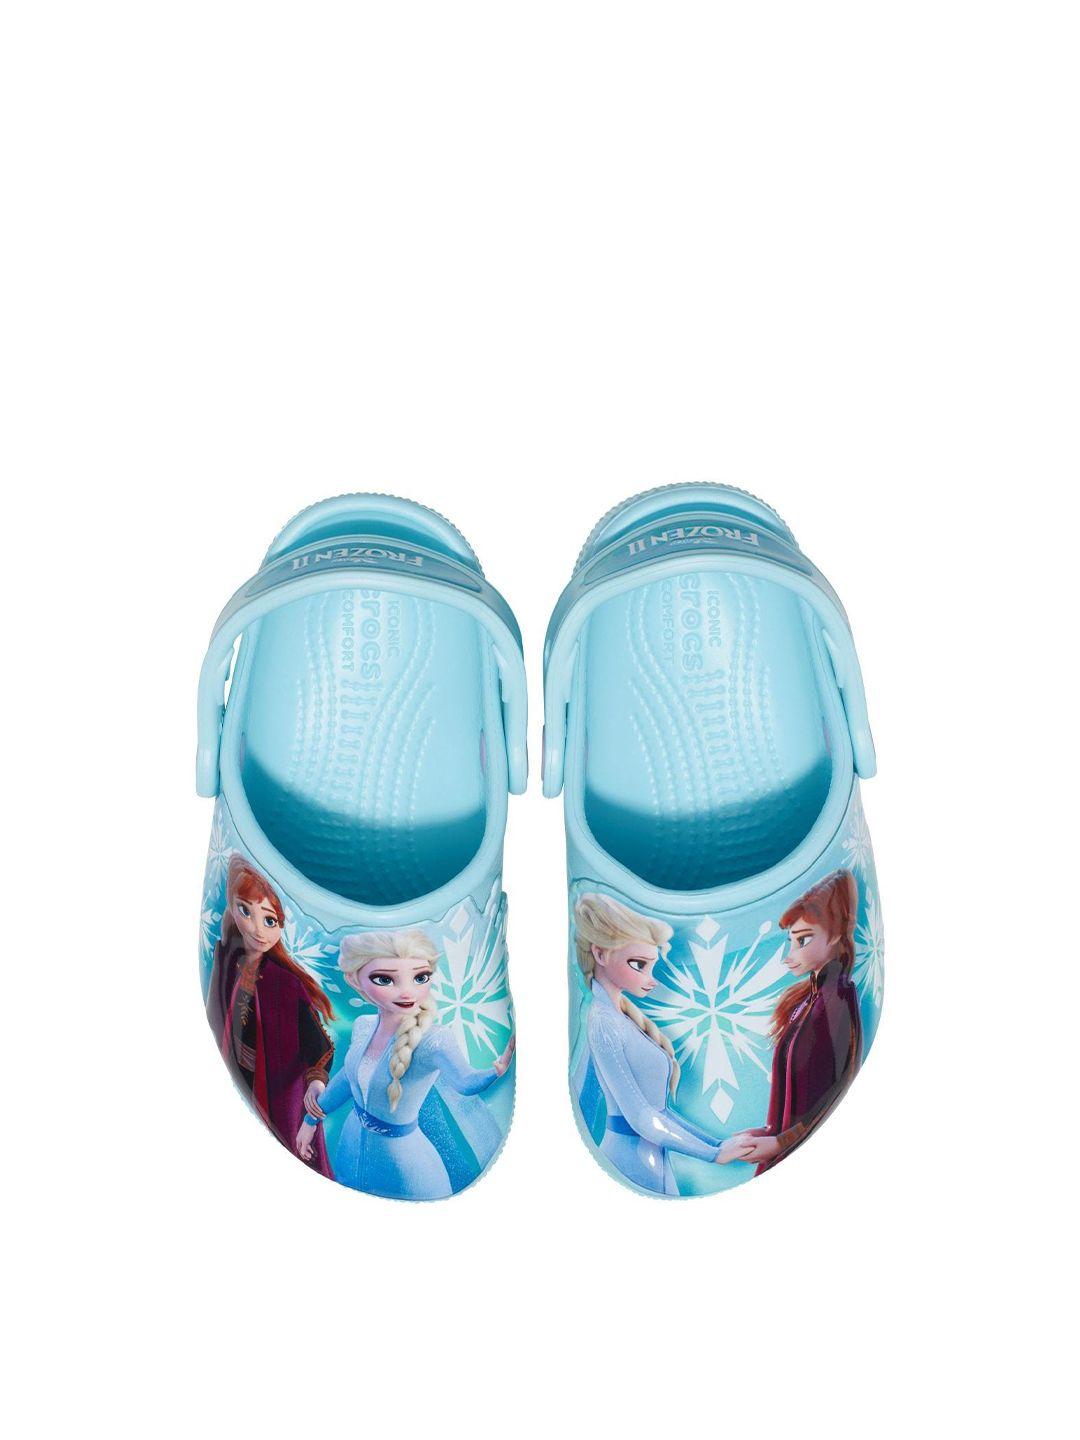 crocs girls blue & red clogs sandals